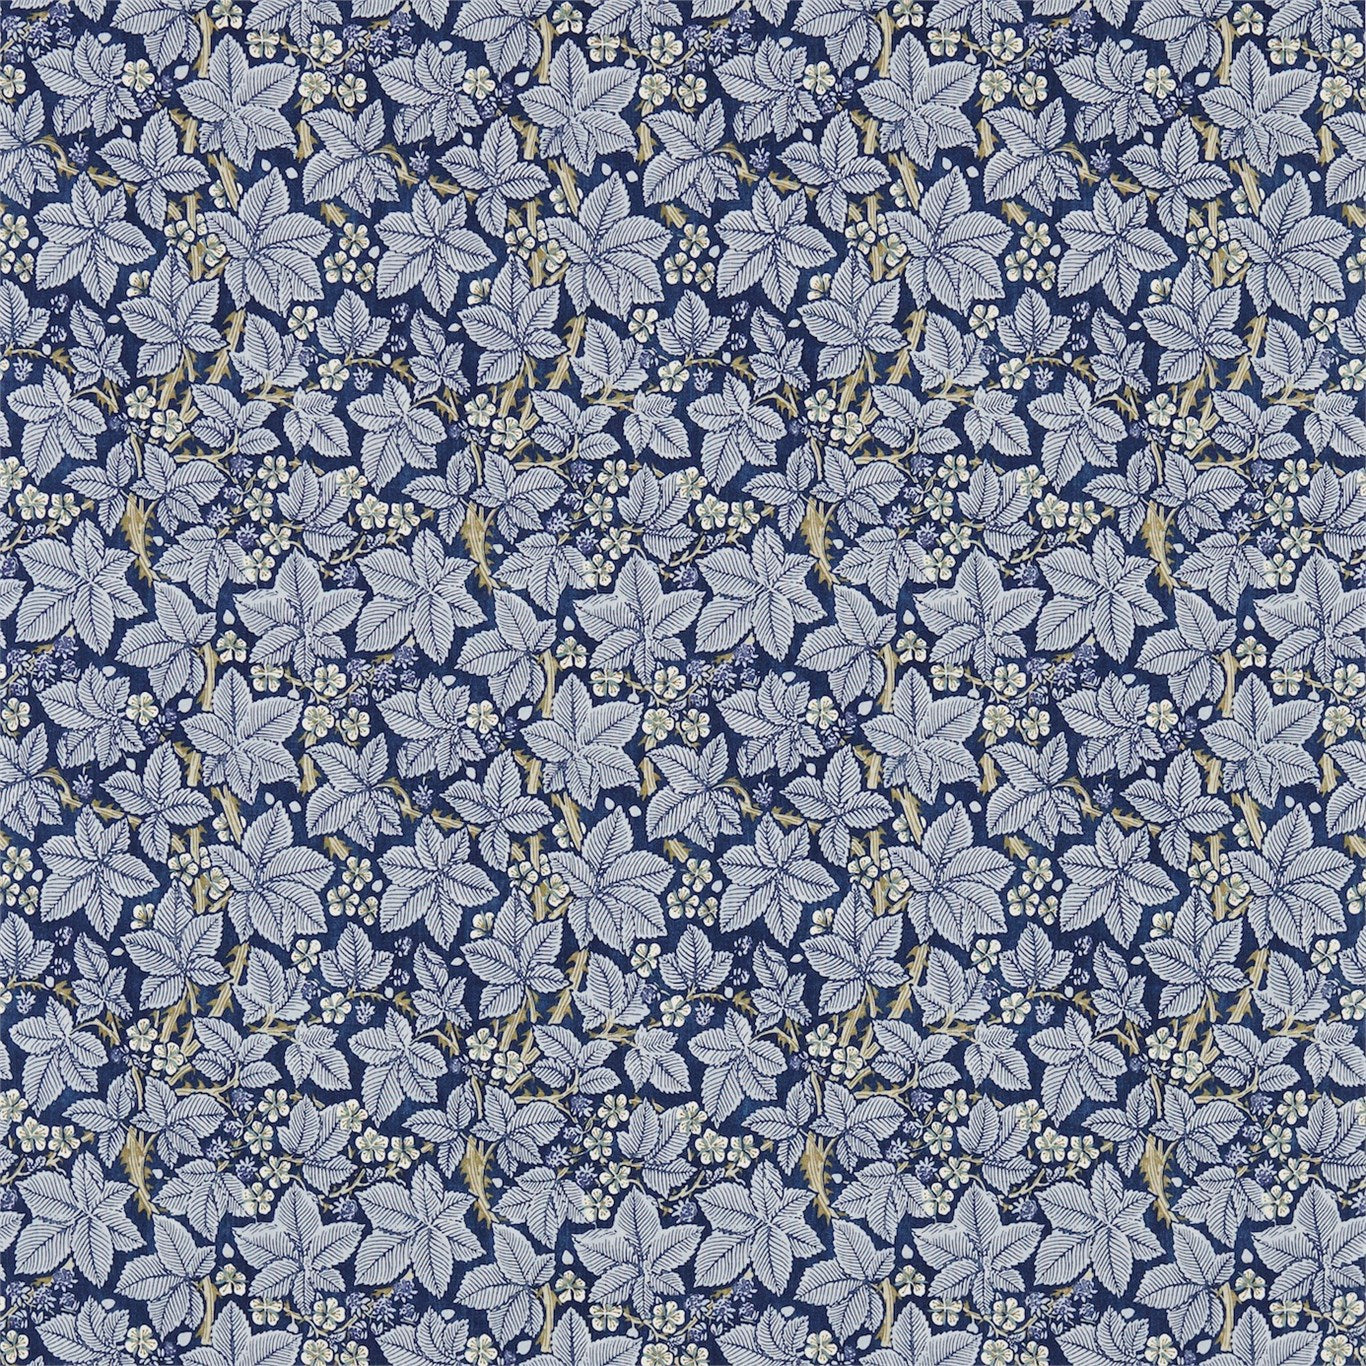 Bramble Fabric by Morris & Co. - DM3P224463 - Indigo/Mineral